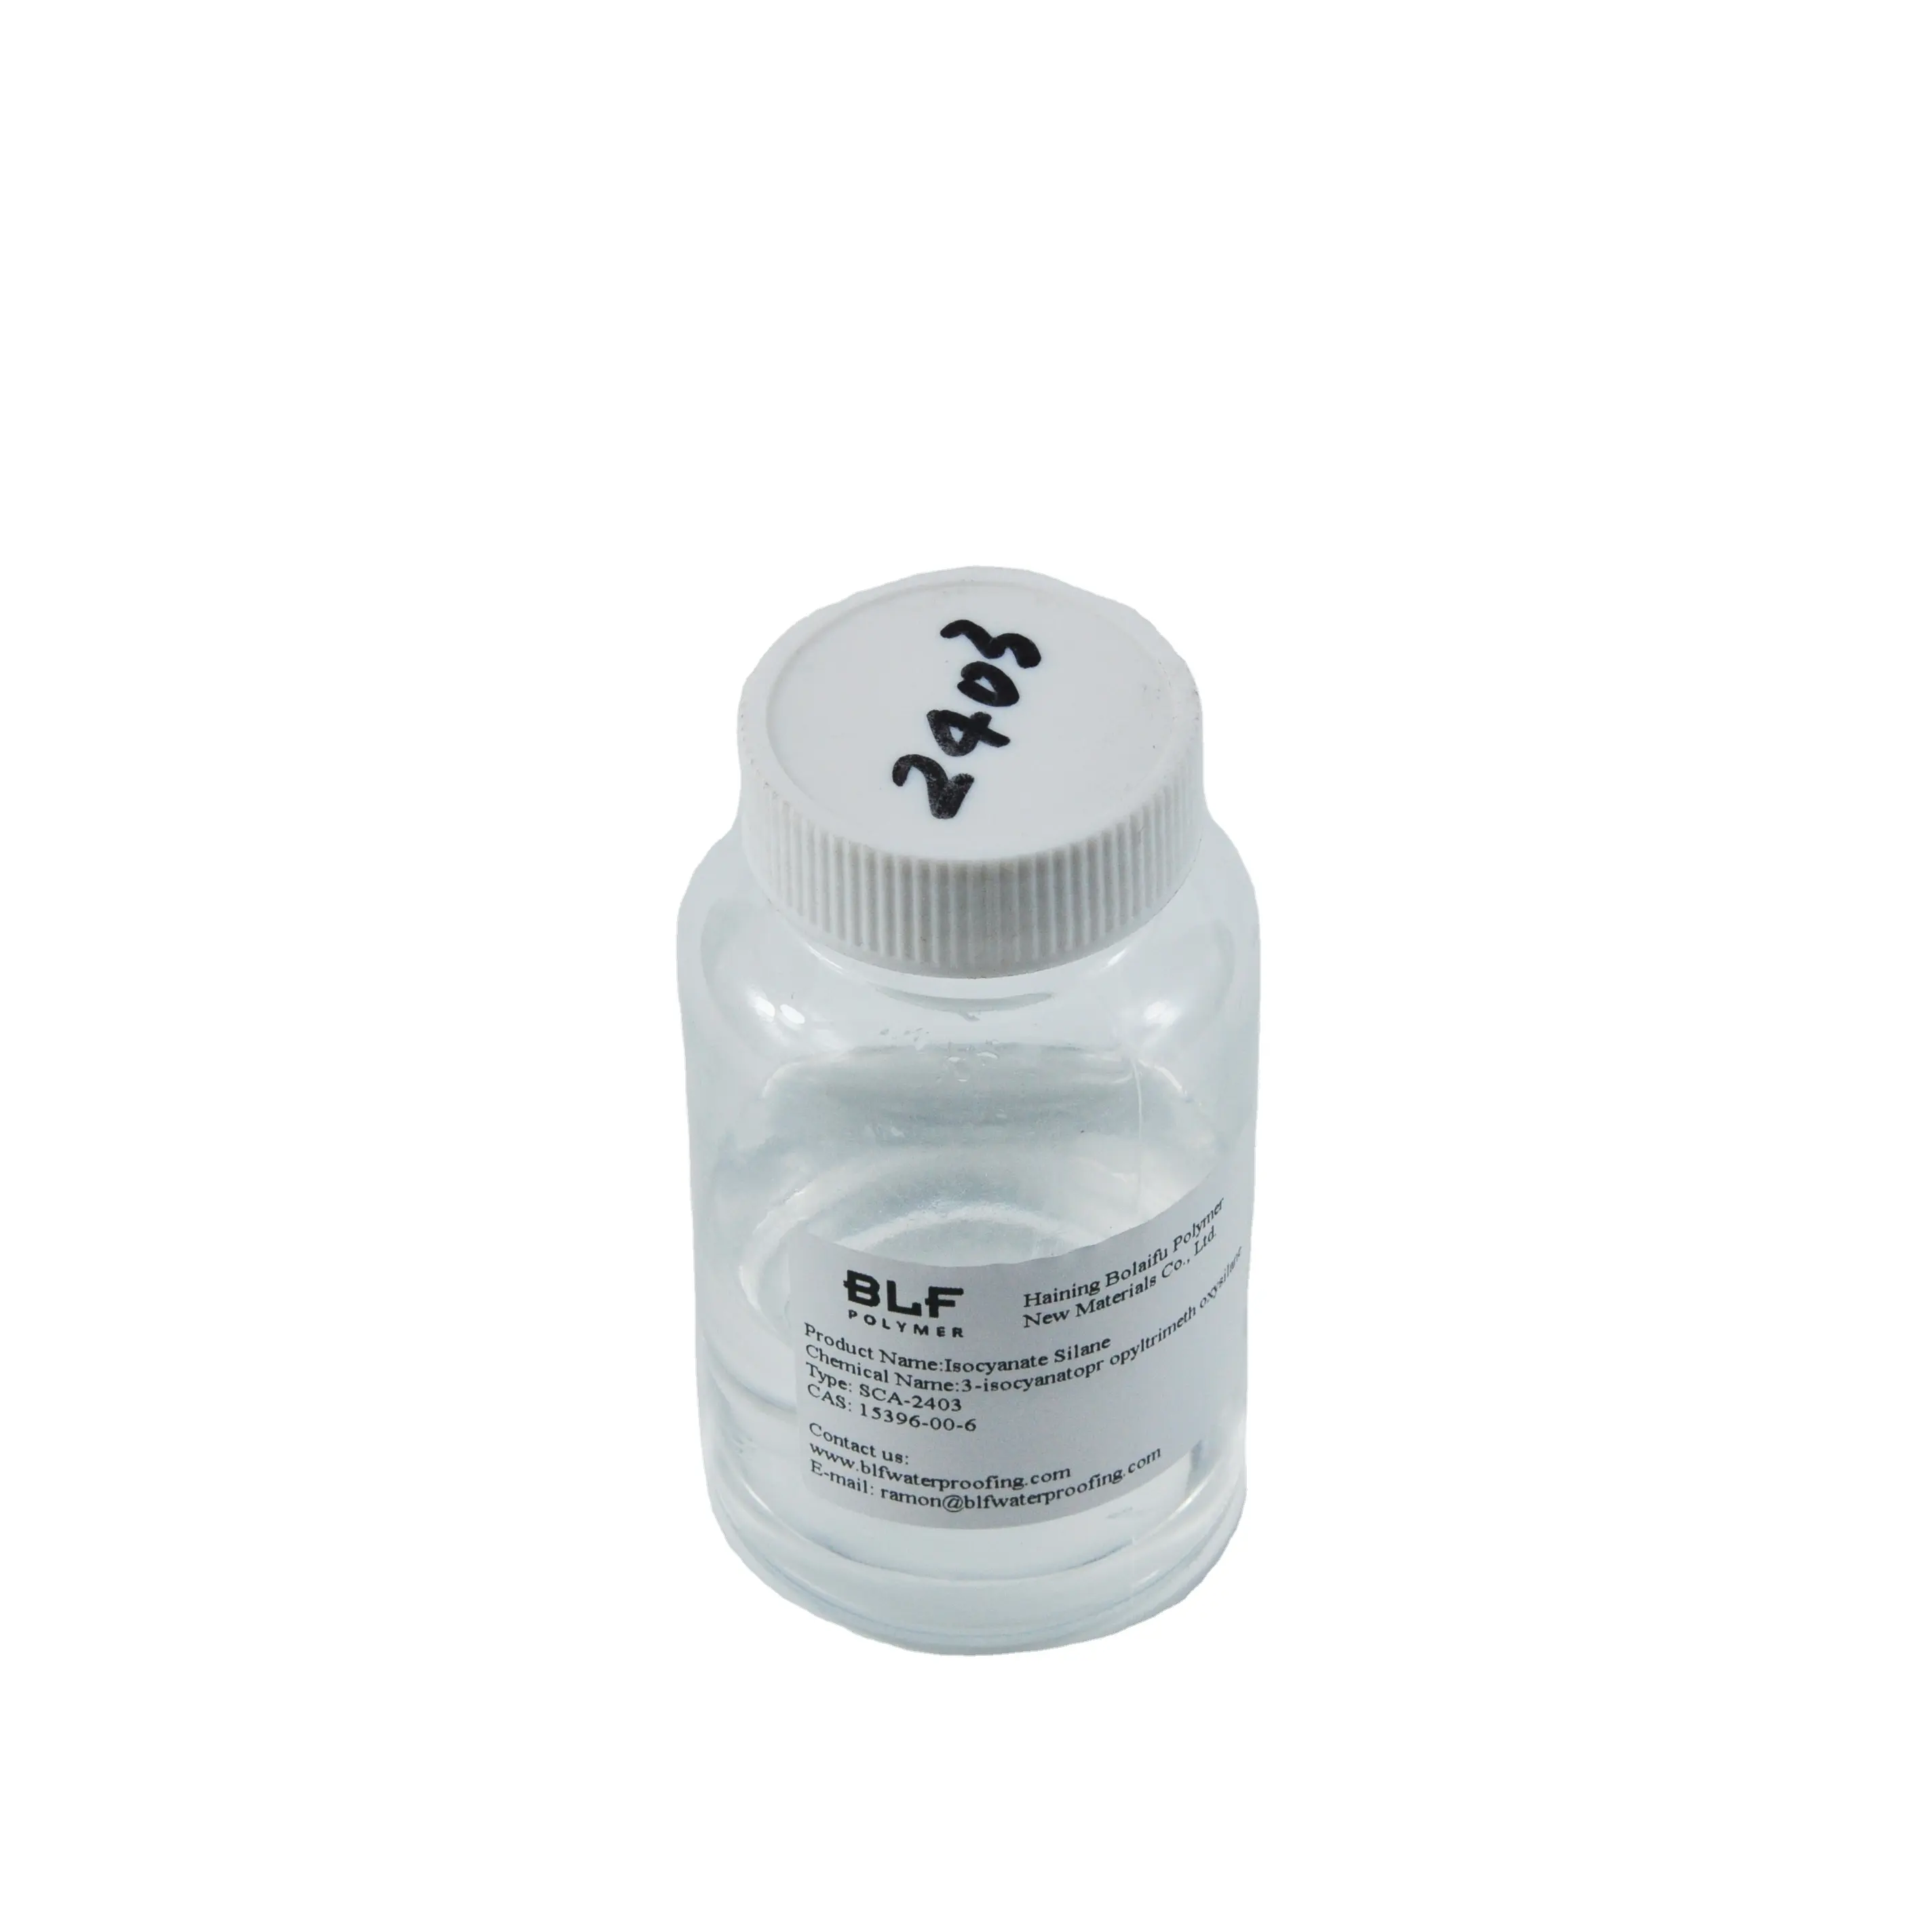 Isocyanate silane CAS 15396-00-6 Sealant nguyên liệu